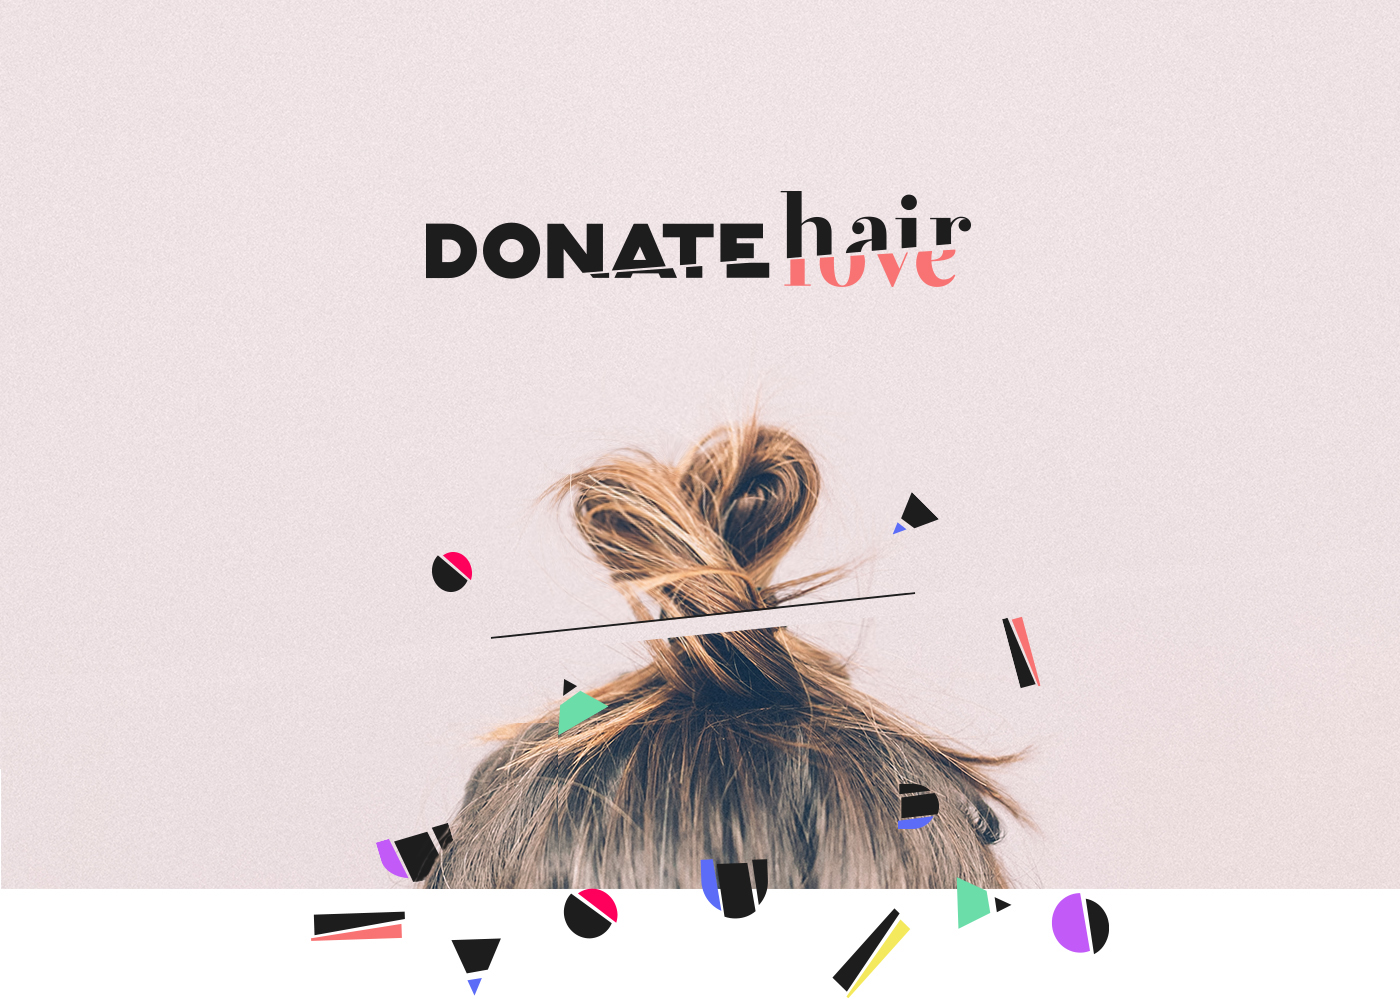 hair donation donate hair Donate Love donatehairgr Greece cut haircut pattern geometrical shapes NGO donator cancer hairloss alopecia